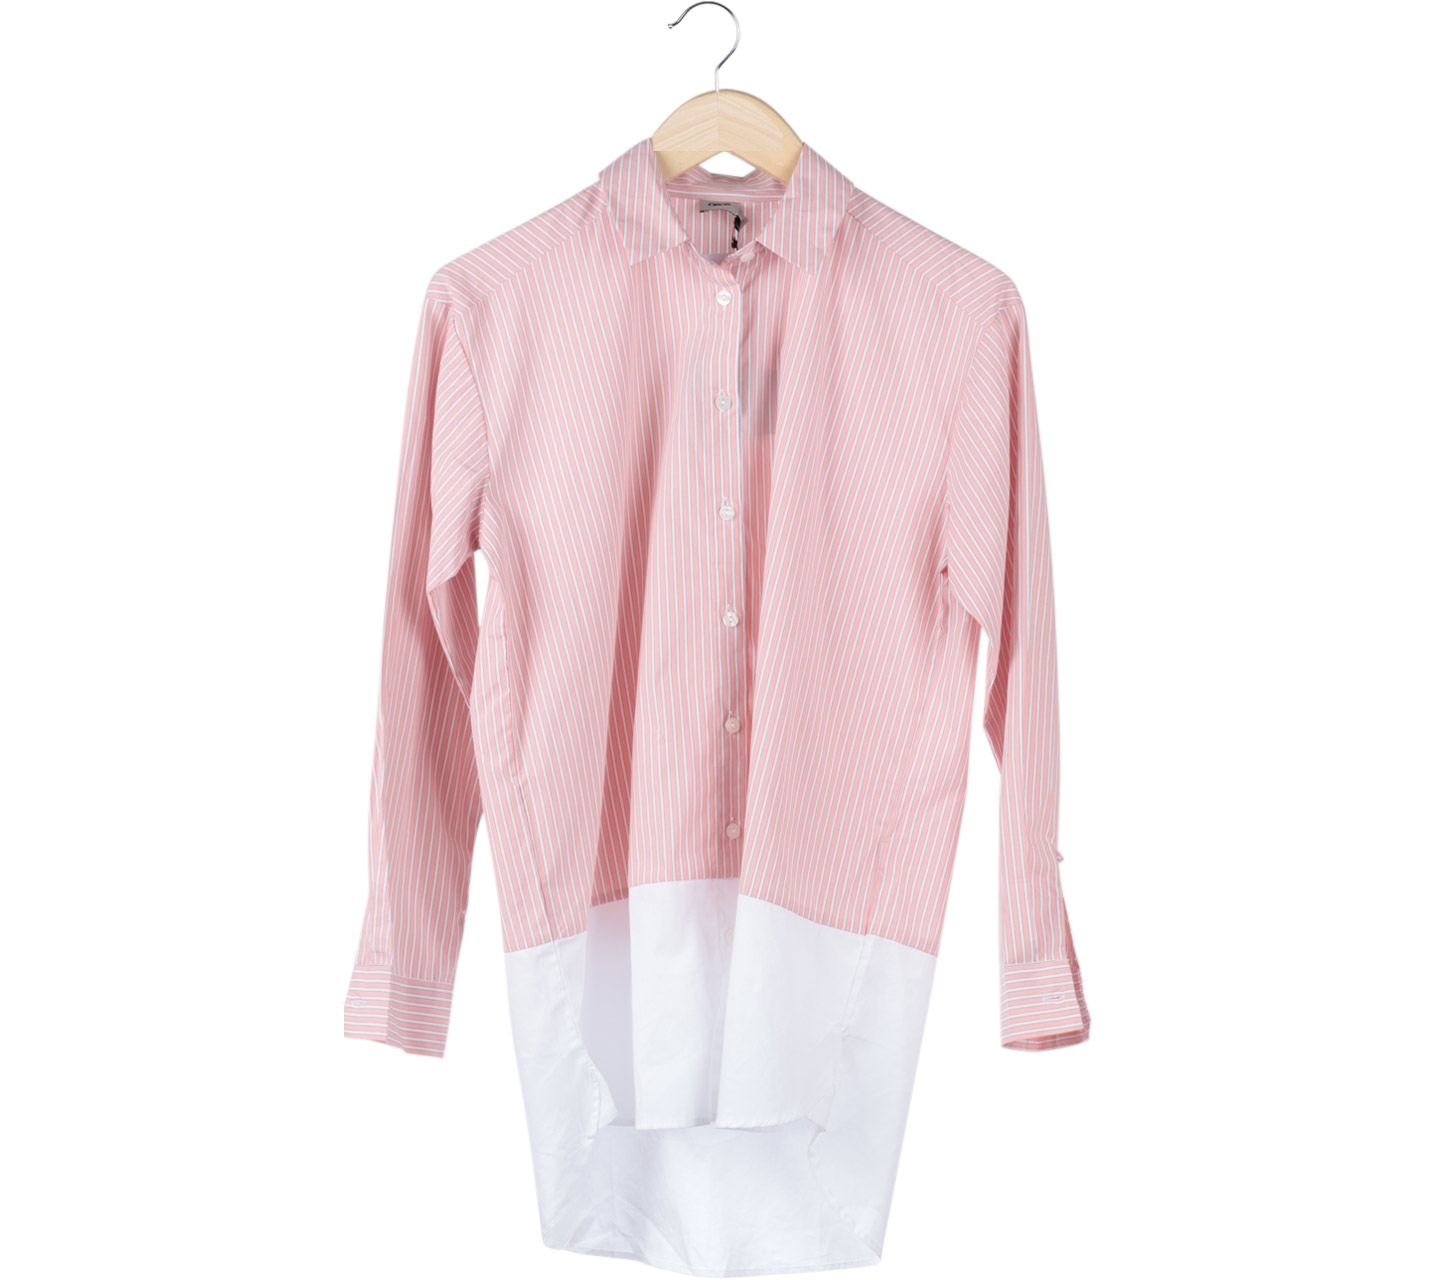 Asos Pink And White Striped Shirt